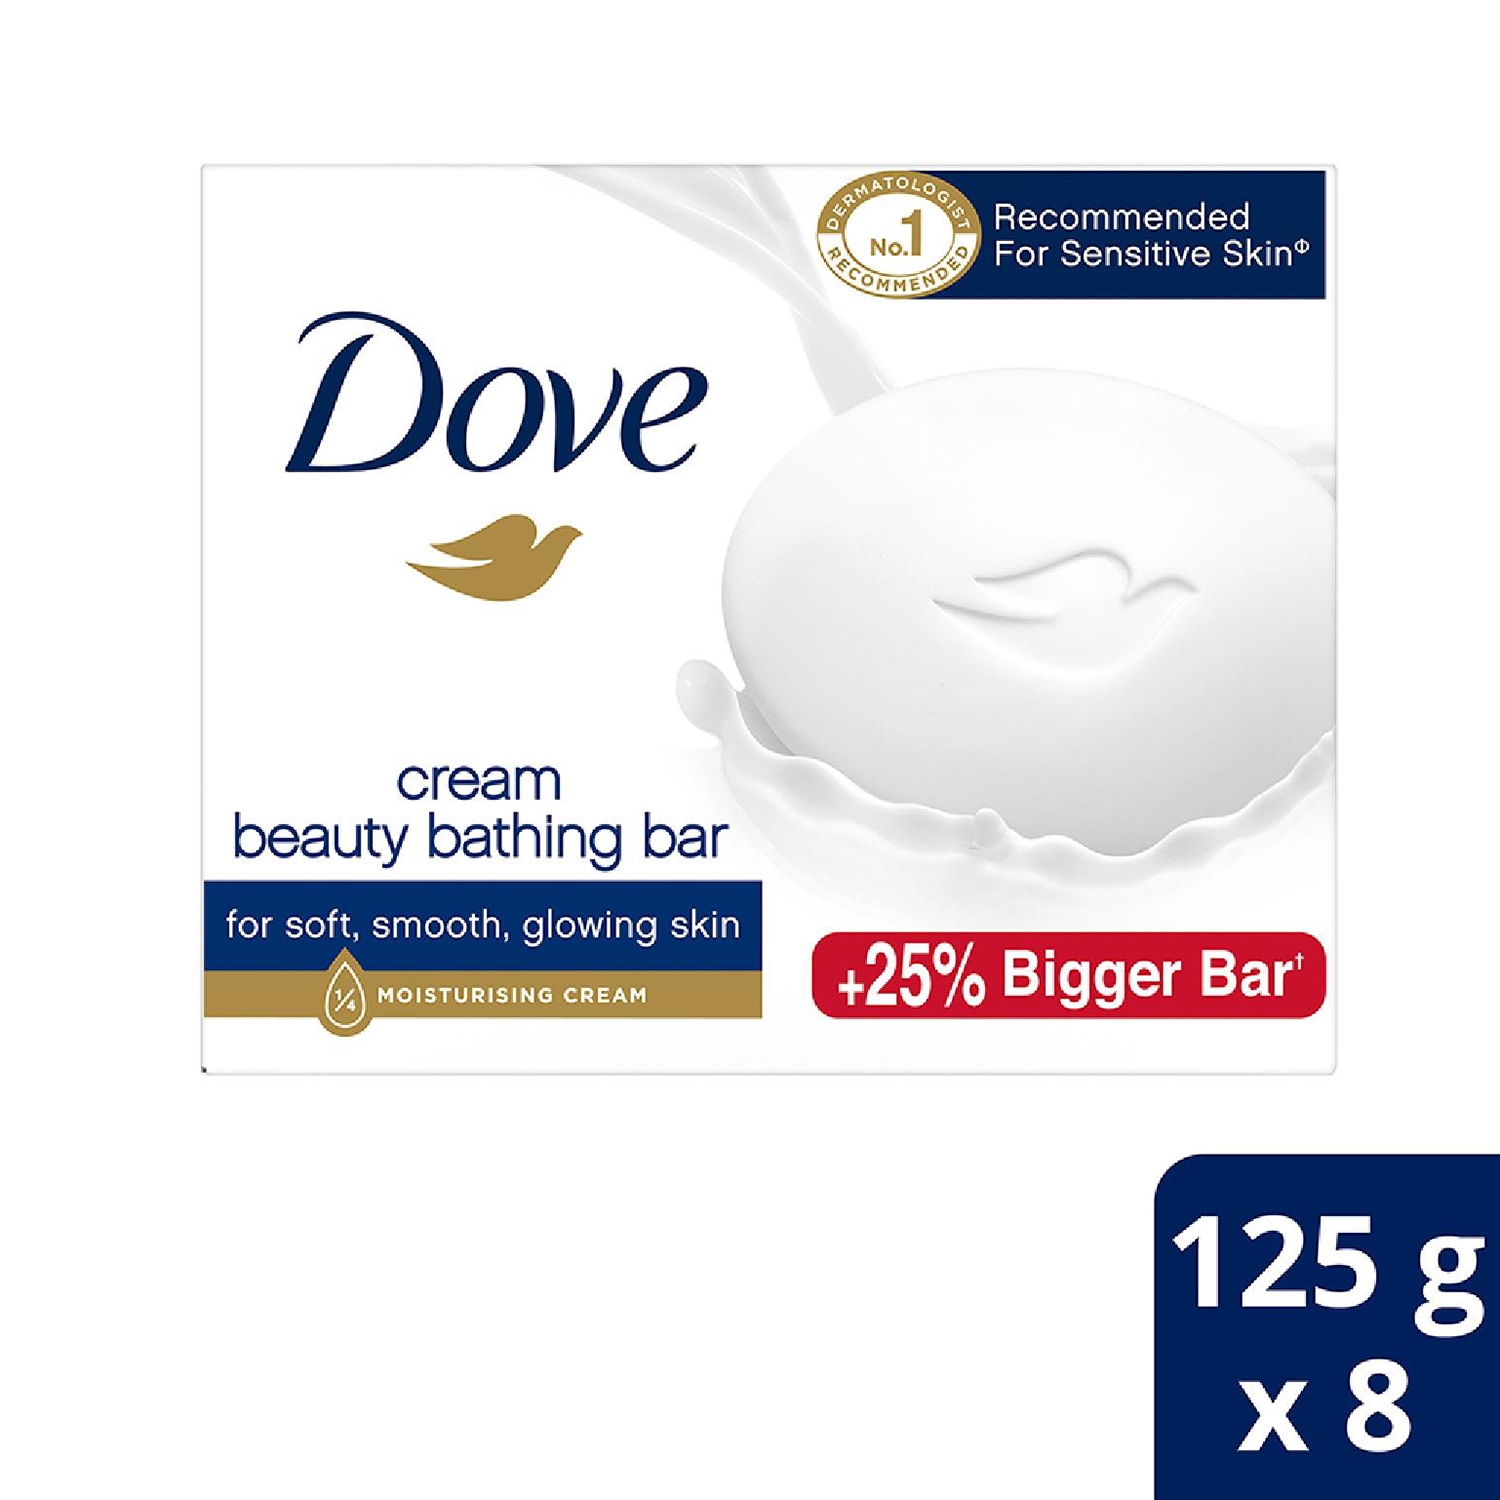 Dove | Dove Cream Beauty Bathing Bar Combo (8Pcs)